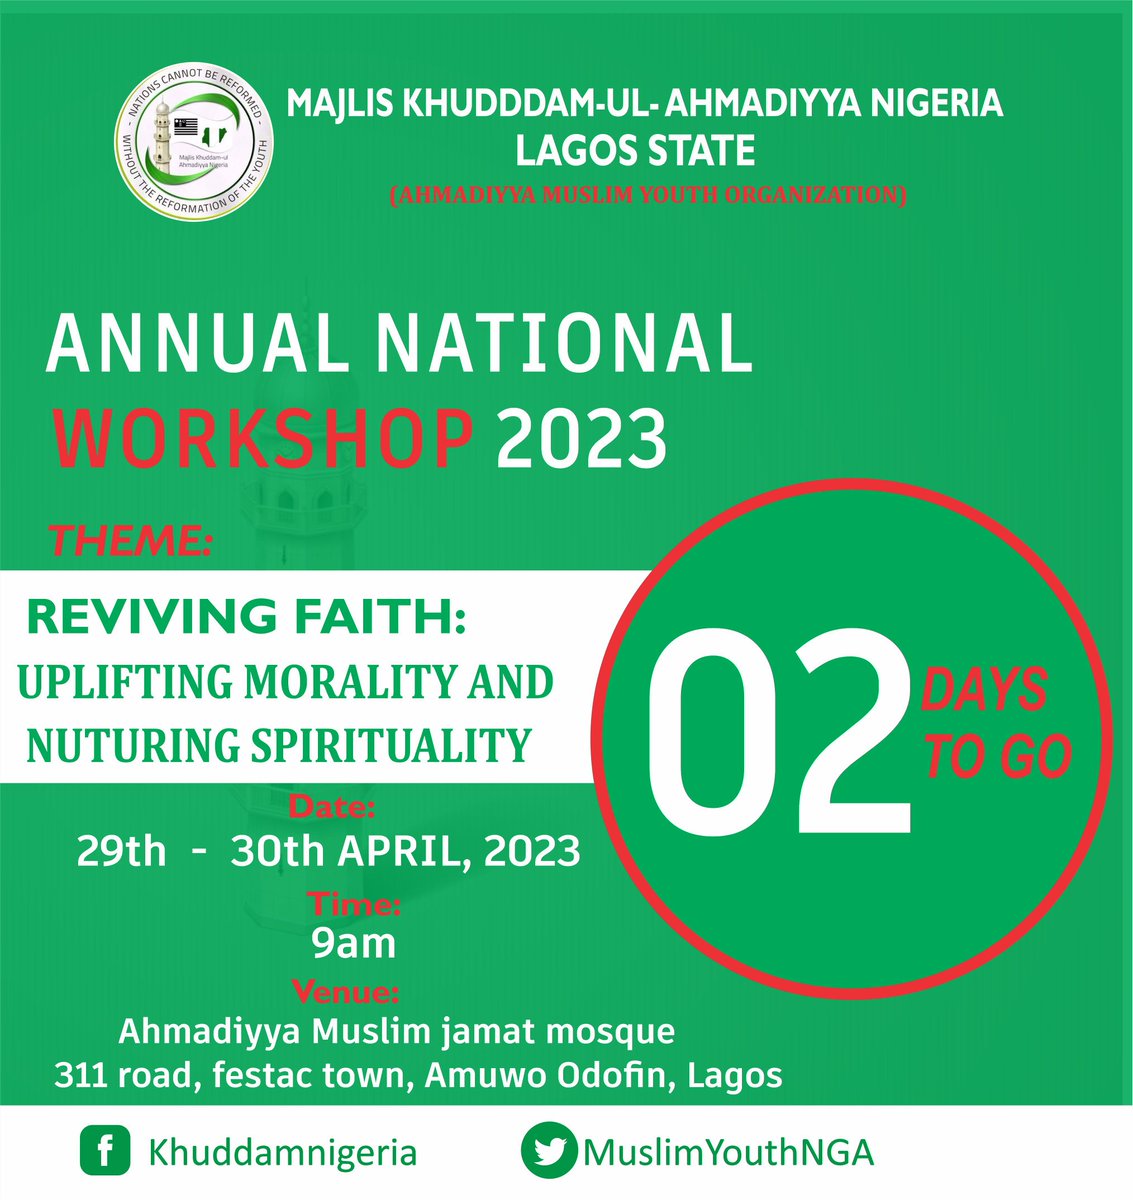 02Days to go

Majlis Khuddam-ul- Ahmadiyya Lagos State invites you to her annual national workshop 2023 themed:
Reviving Faith: Uplifting Morality and Nurturing Spirituality